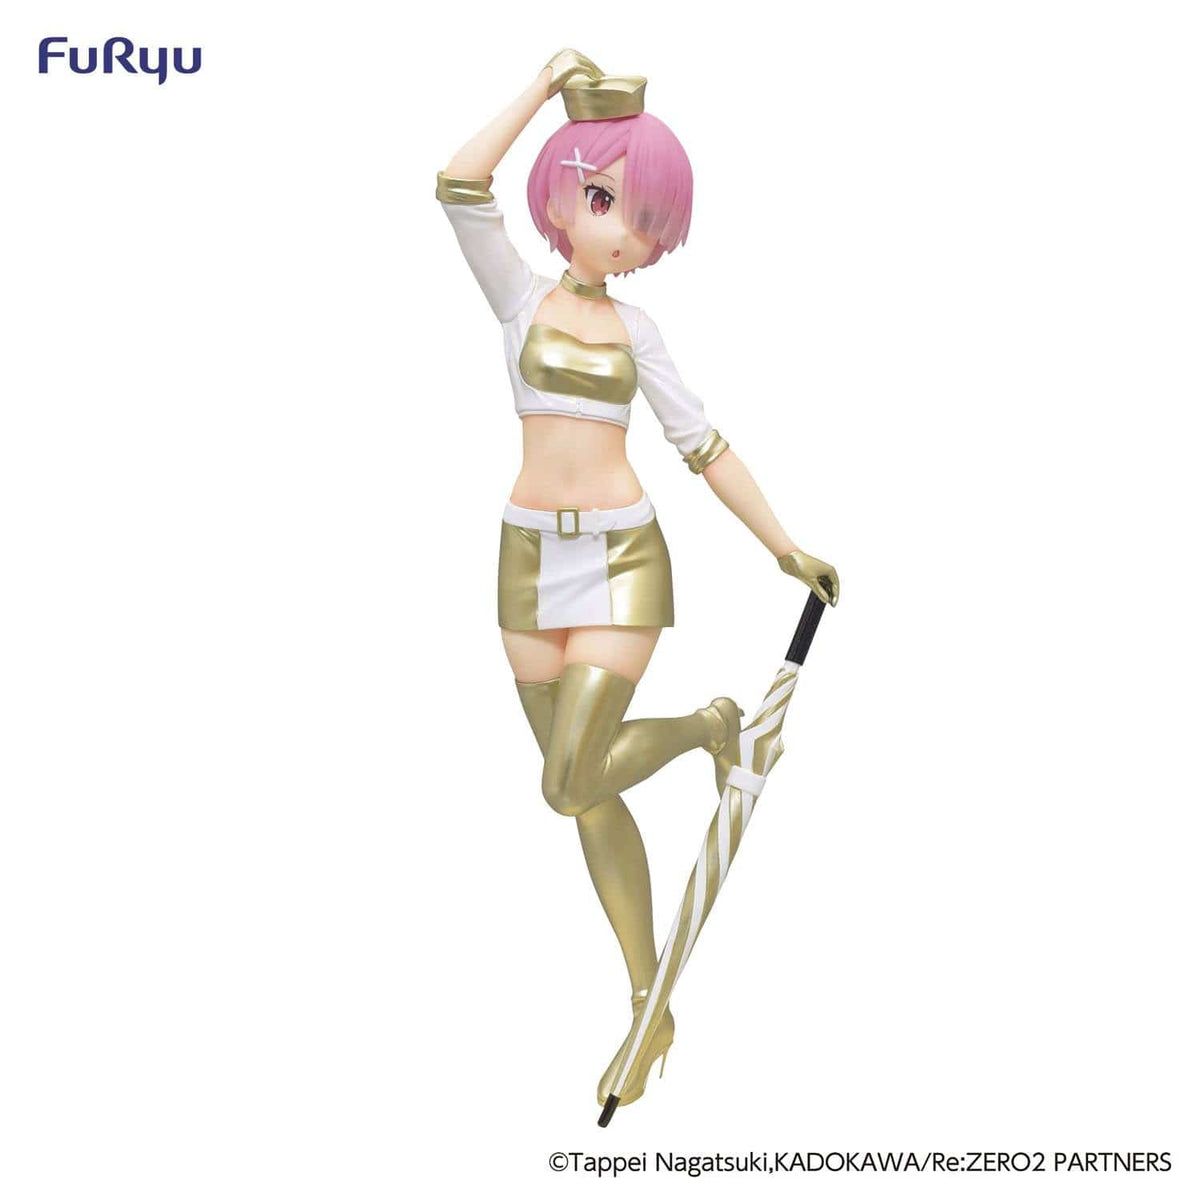 FURYU - RE ZERO STARTING LIFE - TRIO TRY IT RAM GRID GIRL FIGURE